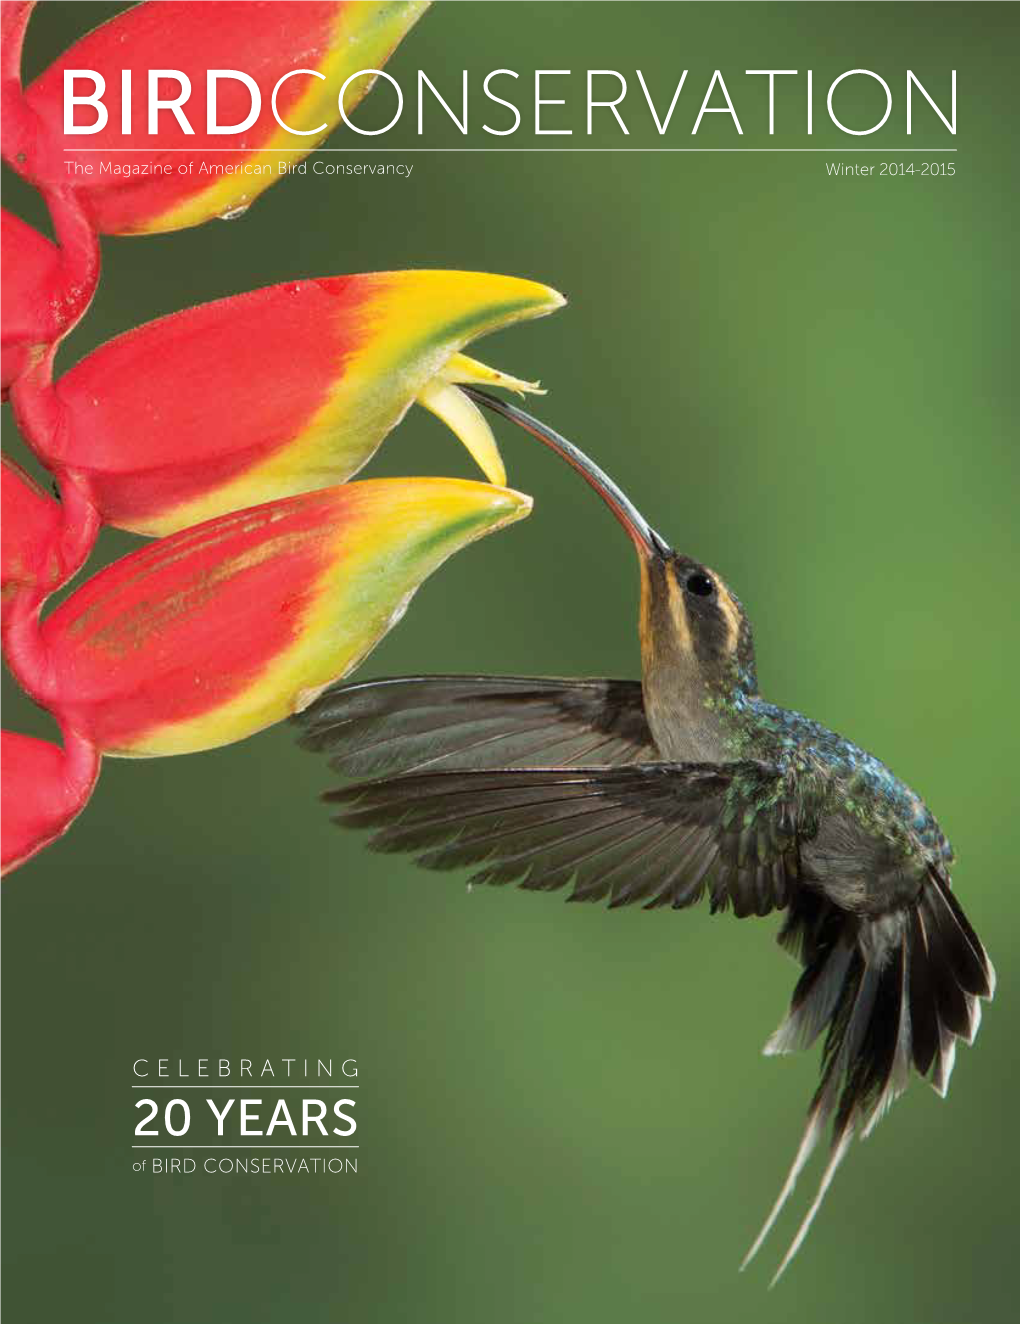 BIRDCONSERVATION the Magazine of American Bird Conservancy Winter 2014-2015